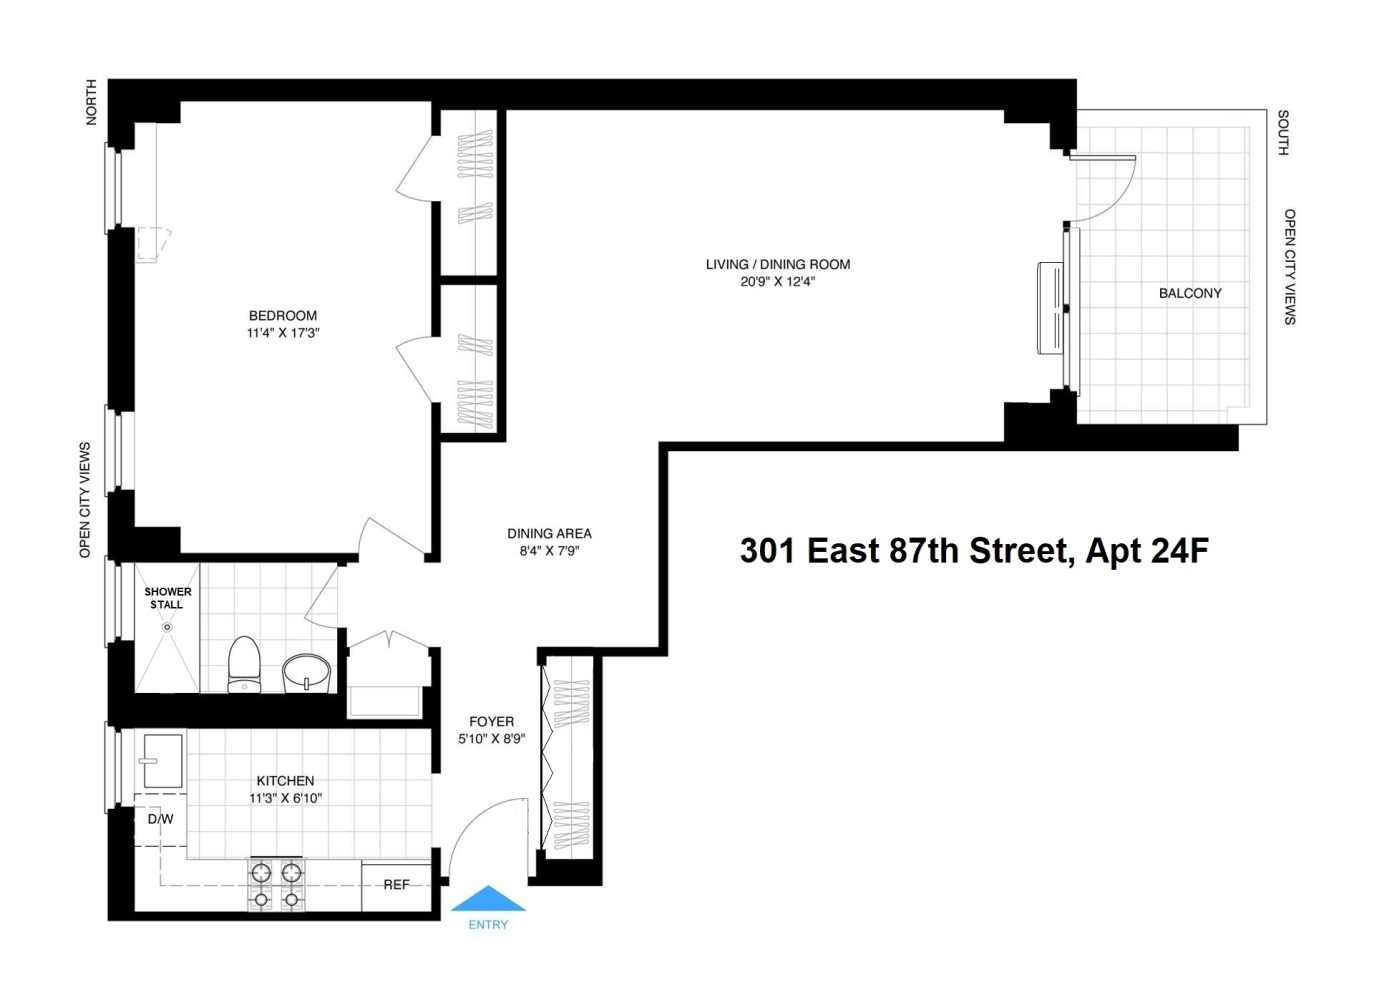 Floorplan for 301 East 87th Street, 24F